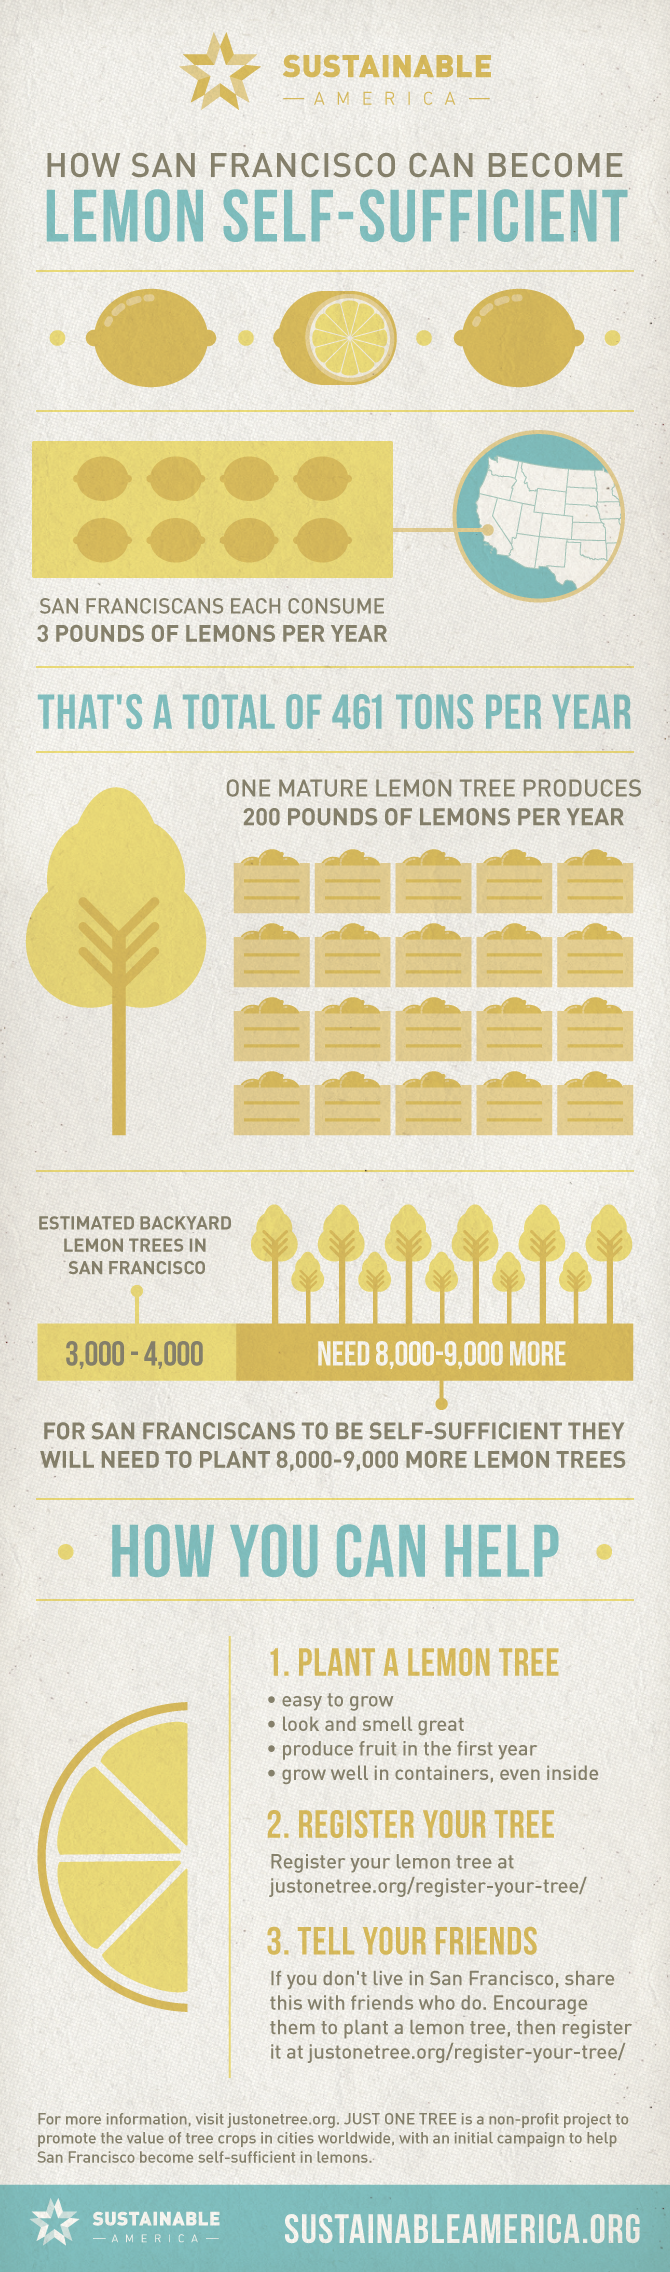 San Francisco Lemon Tree Project